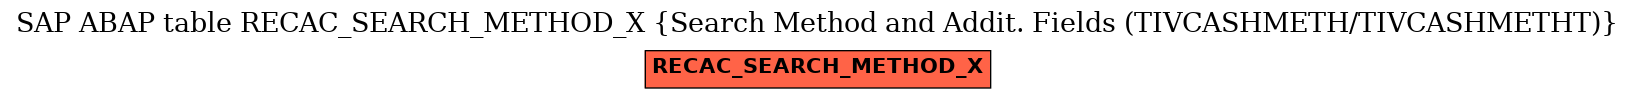 E-R Diagram for table RECAC_SEARCH_METHOD_X (Search Method and Addit. Fields (TIVCASHMETH/TIVCASHMETHT))